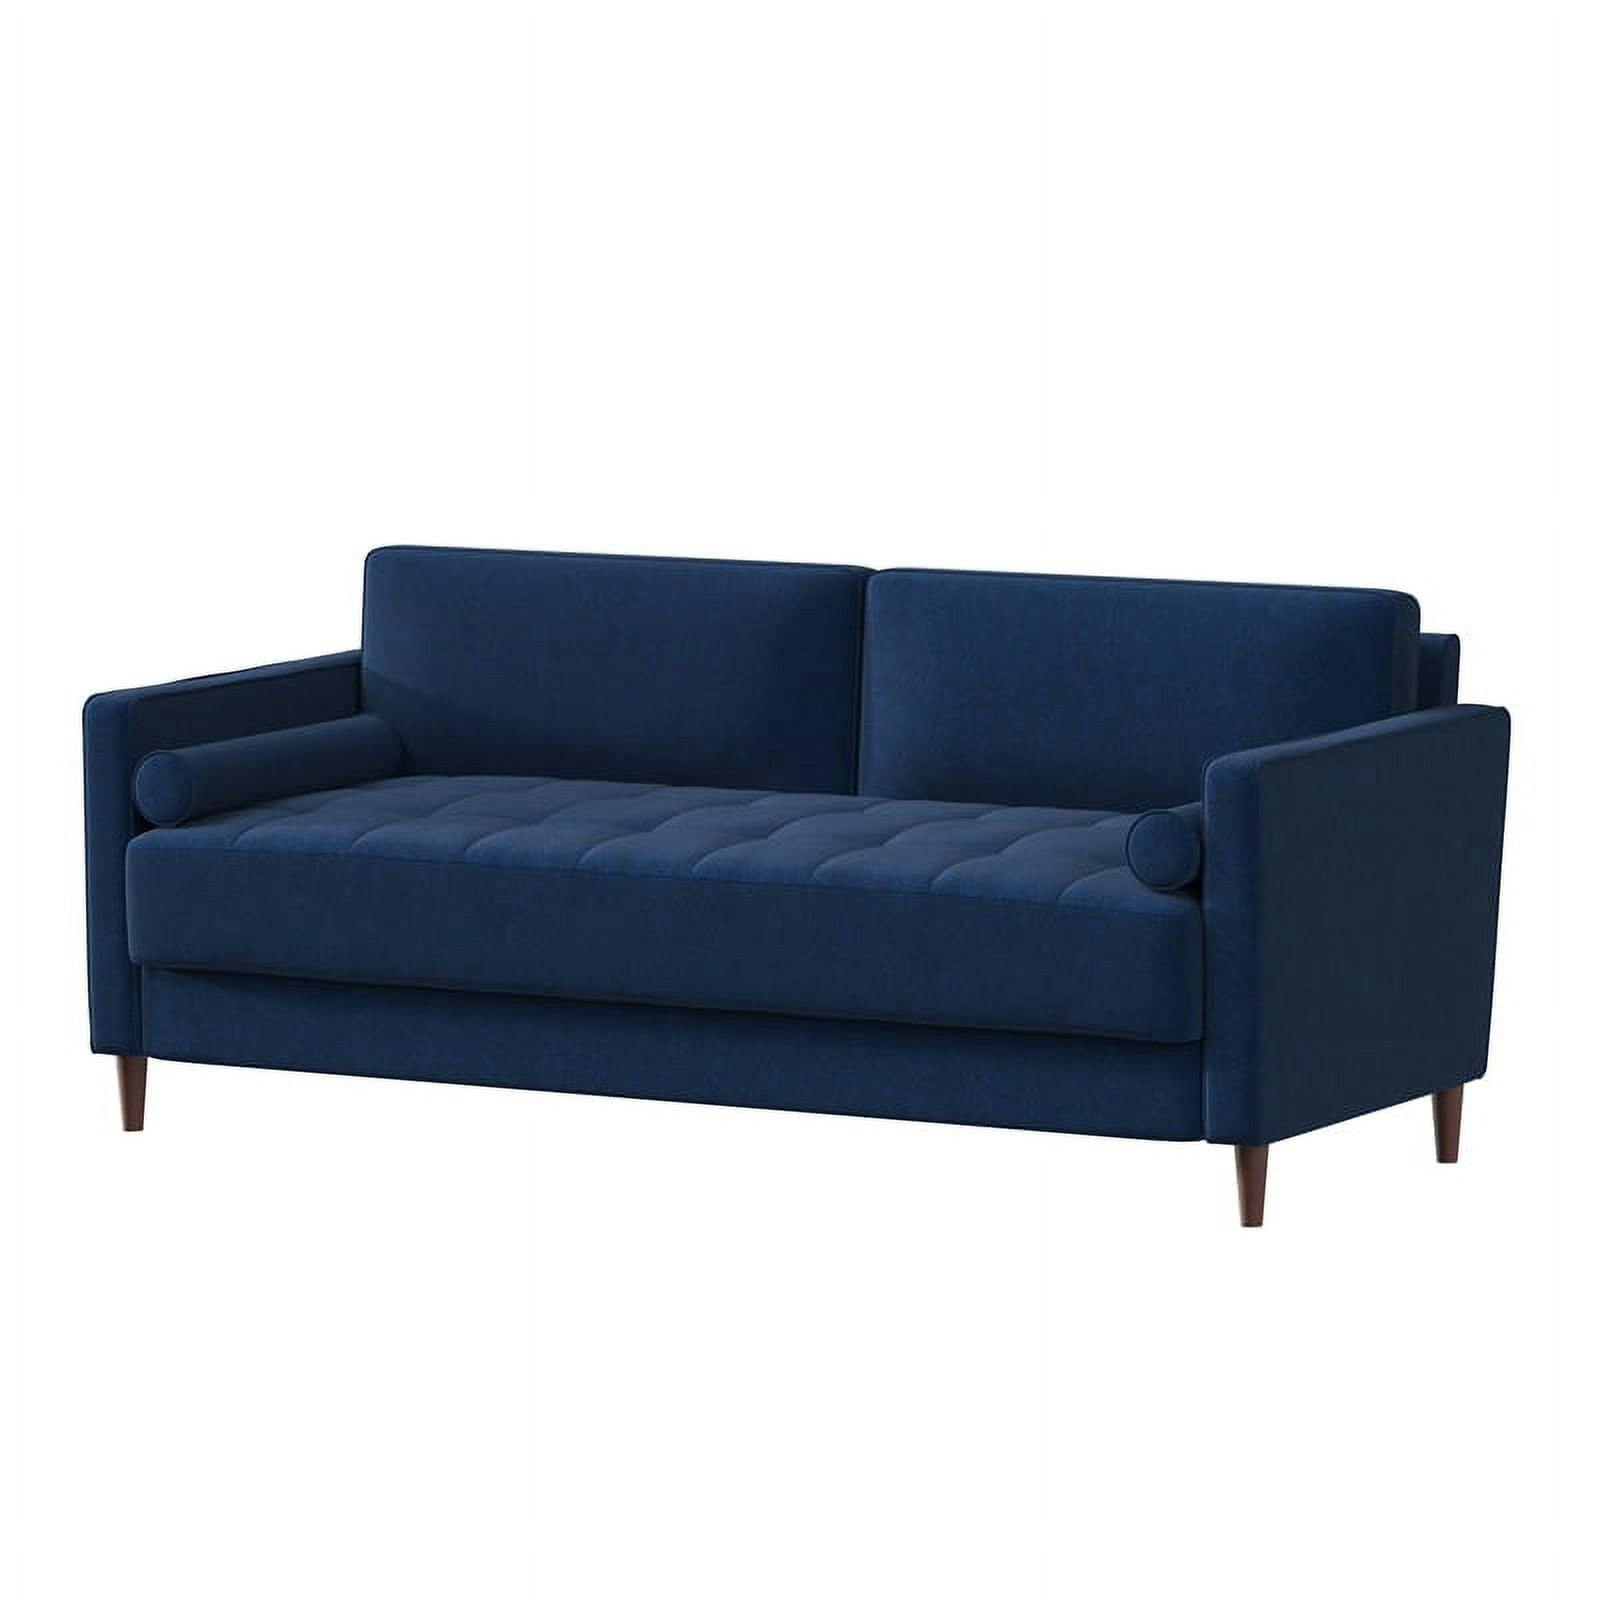 Mid-Century Modern Navy Blue Tufted Microfiber Sofa with Wood Legs